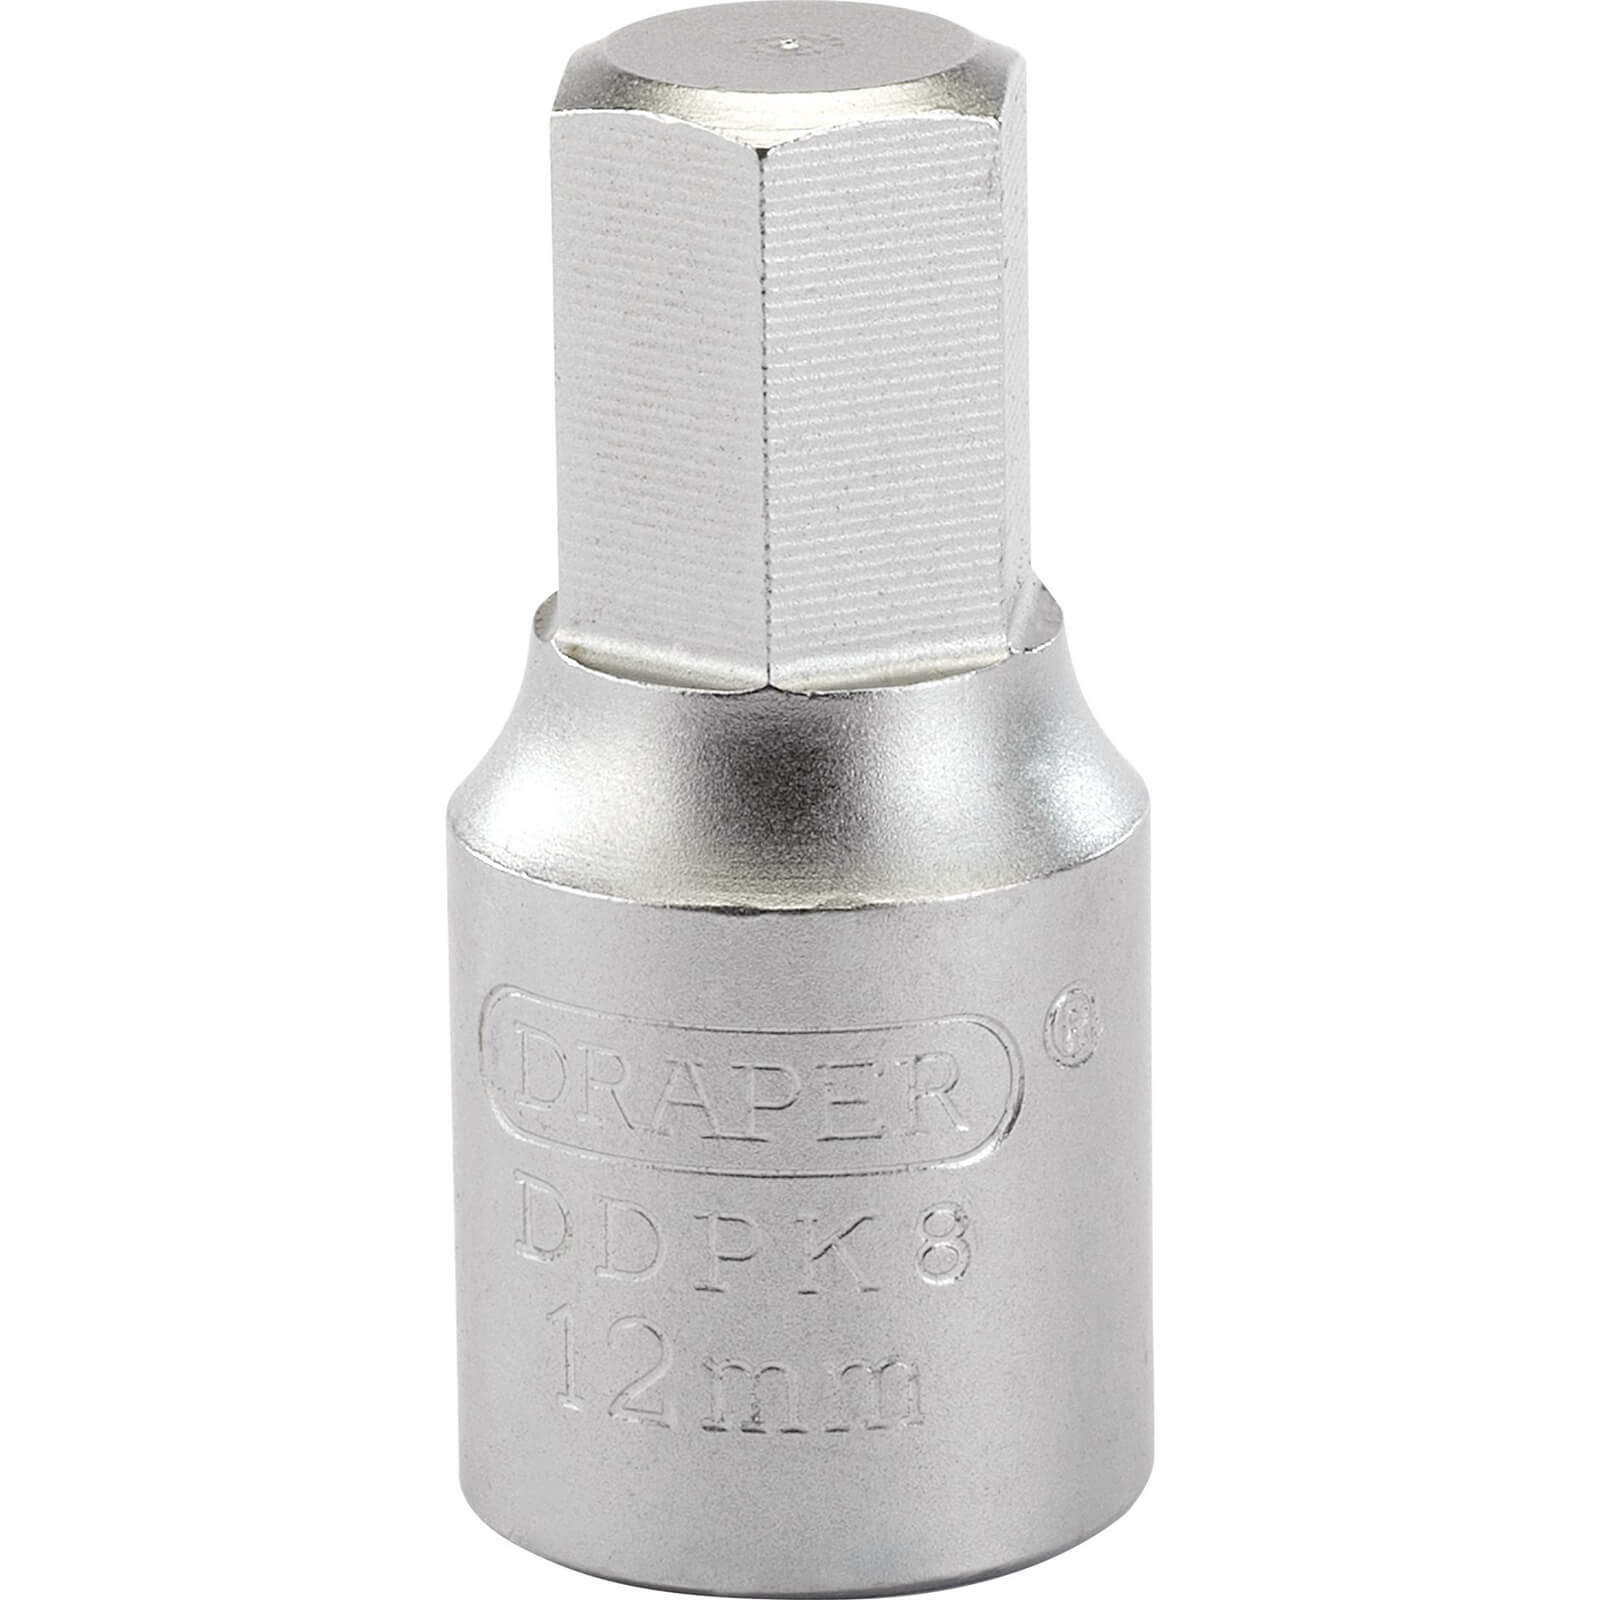 Image of Draper Metric Drain Plug Key 3/8" 12mm